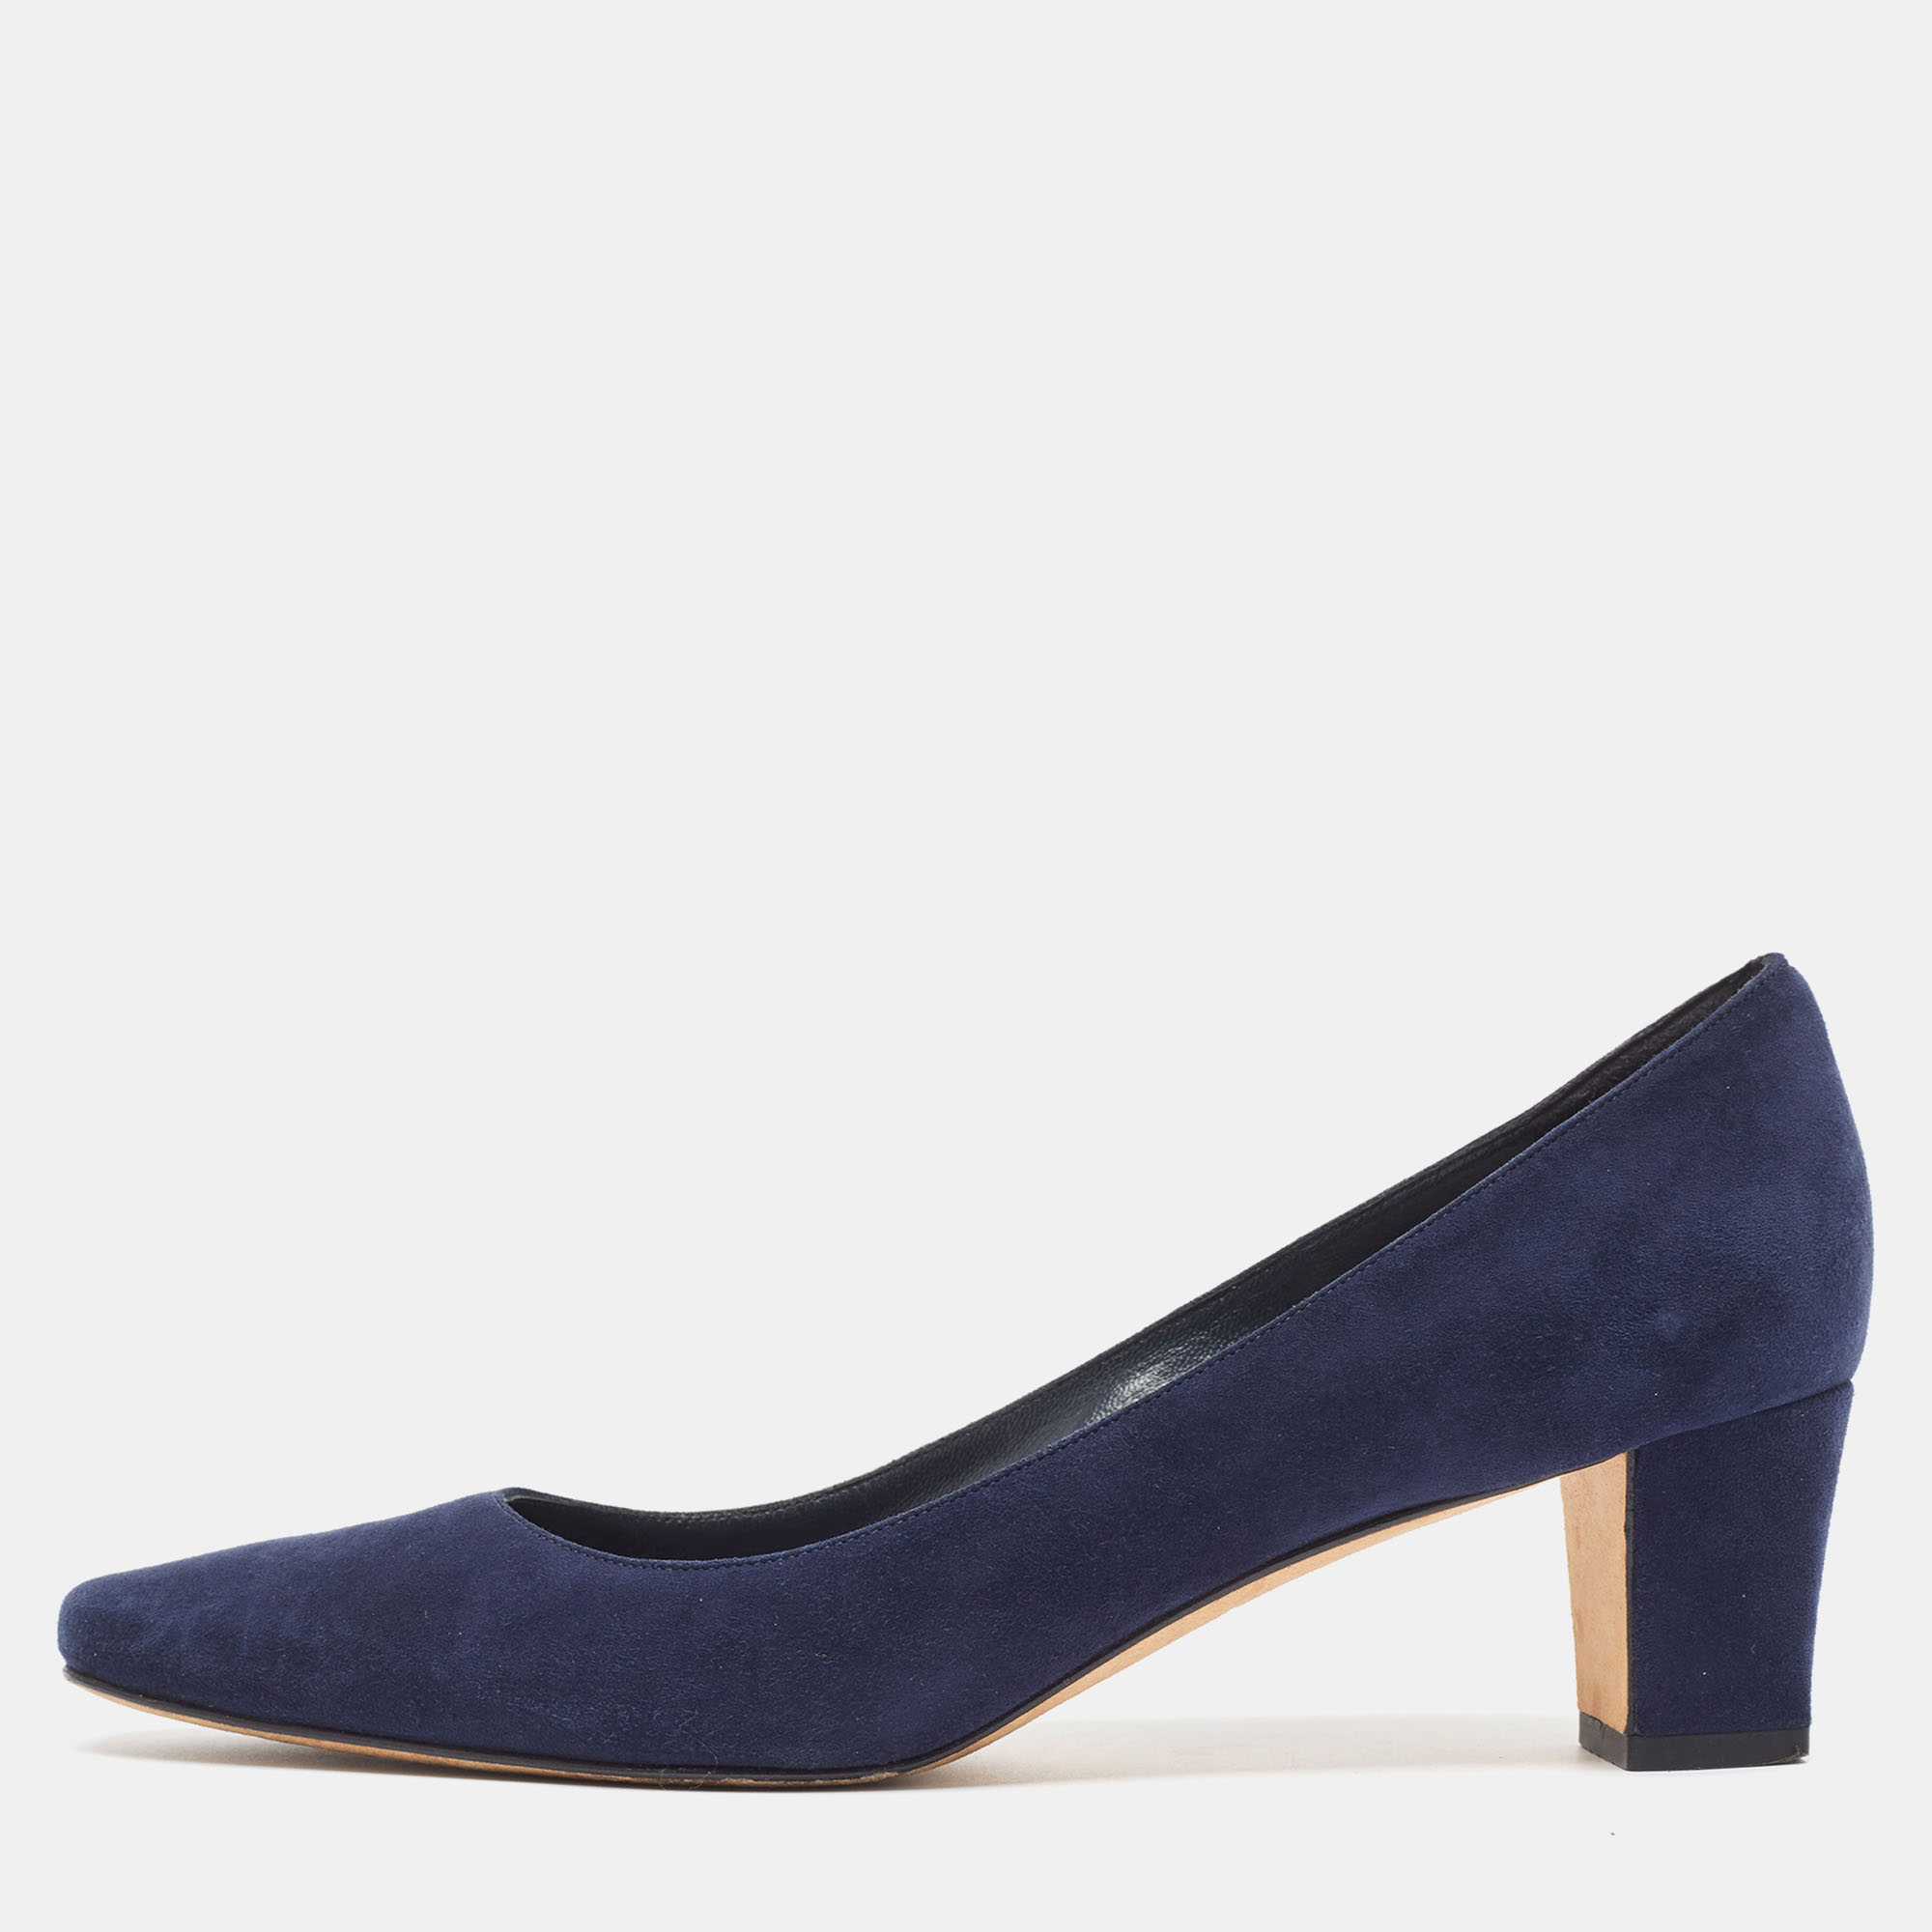 Manolo blahnik navy blue suede block heel pumps size 38